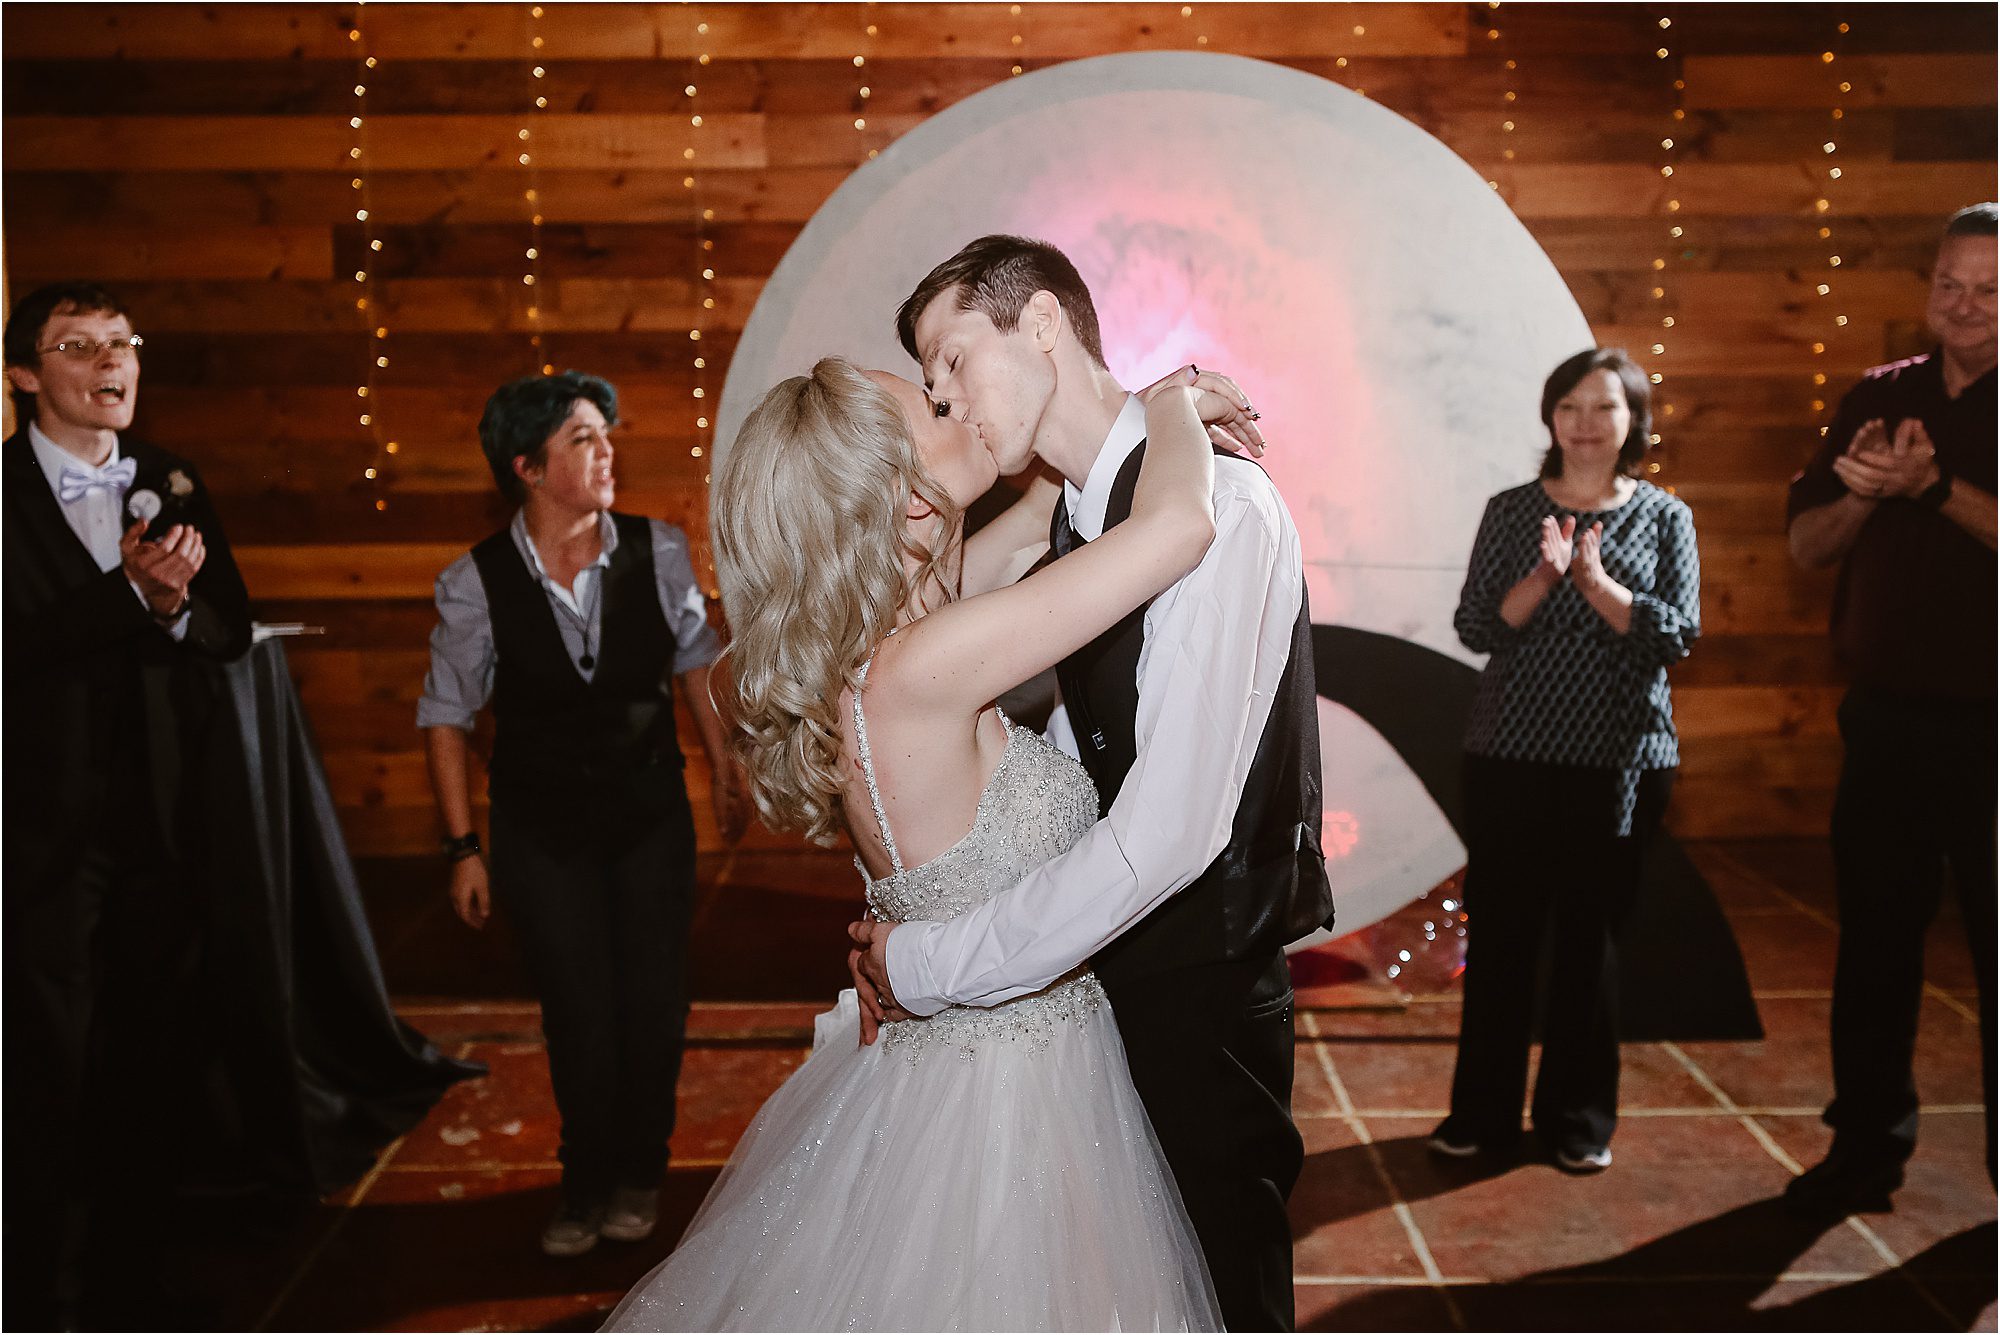 bride and groom kiss on dance floor at wedding reception